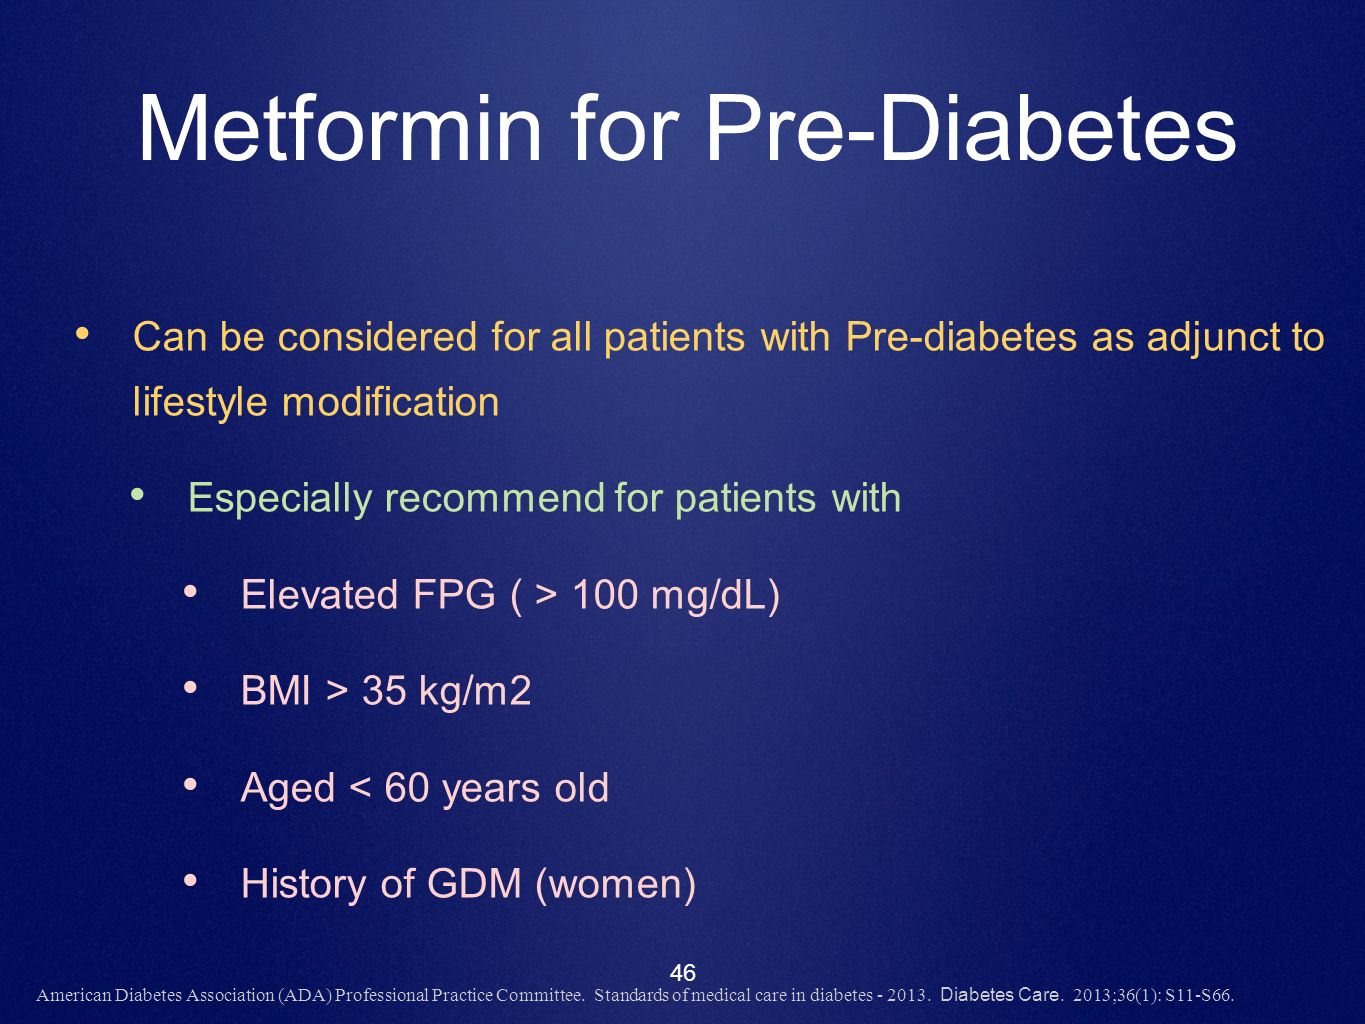 metformin for prediabetes ada guidelines)